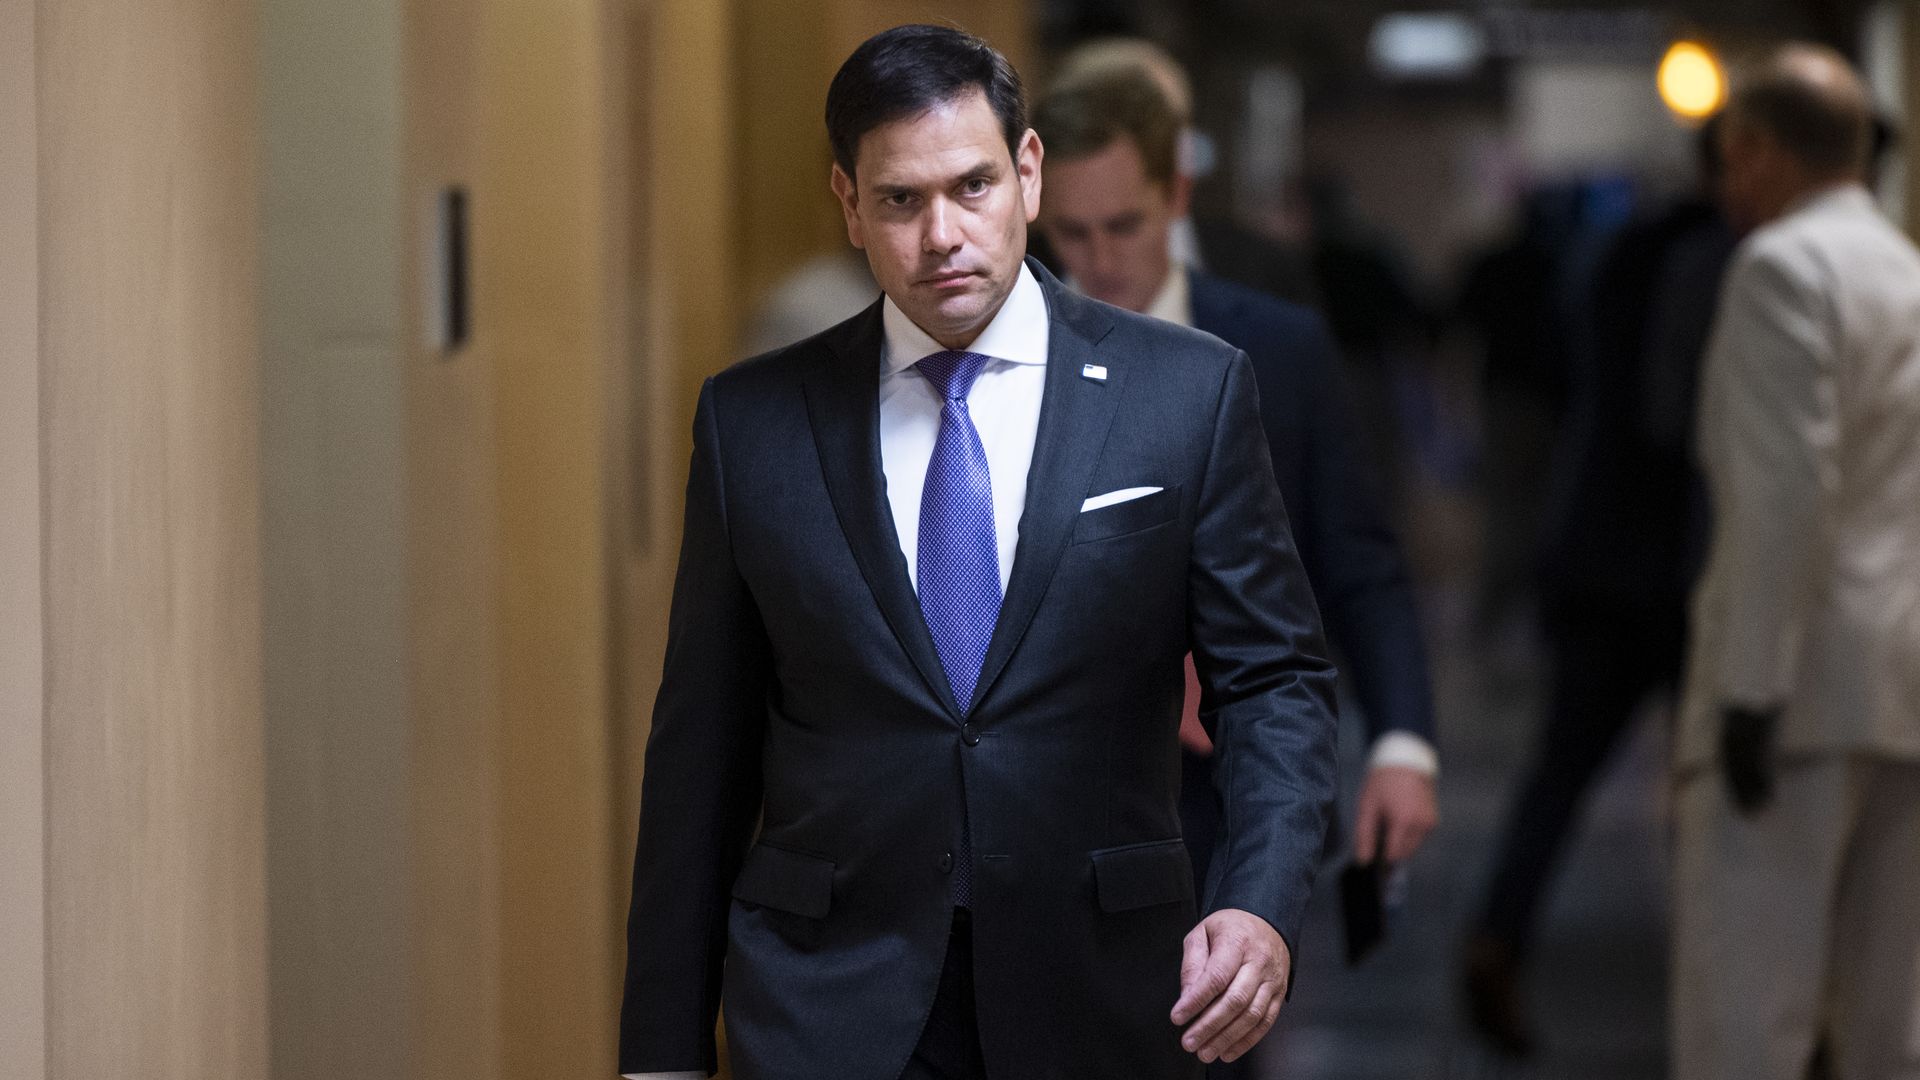 Sen. Marco Rubio is seen walking down a hall in the U.S. Capitol.